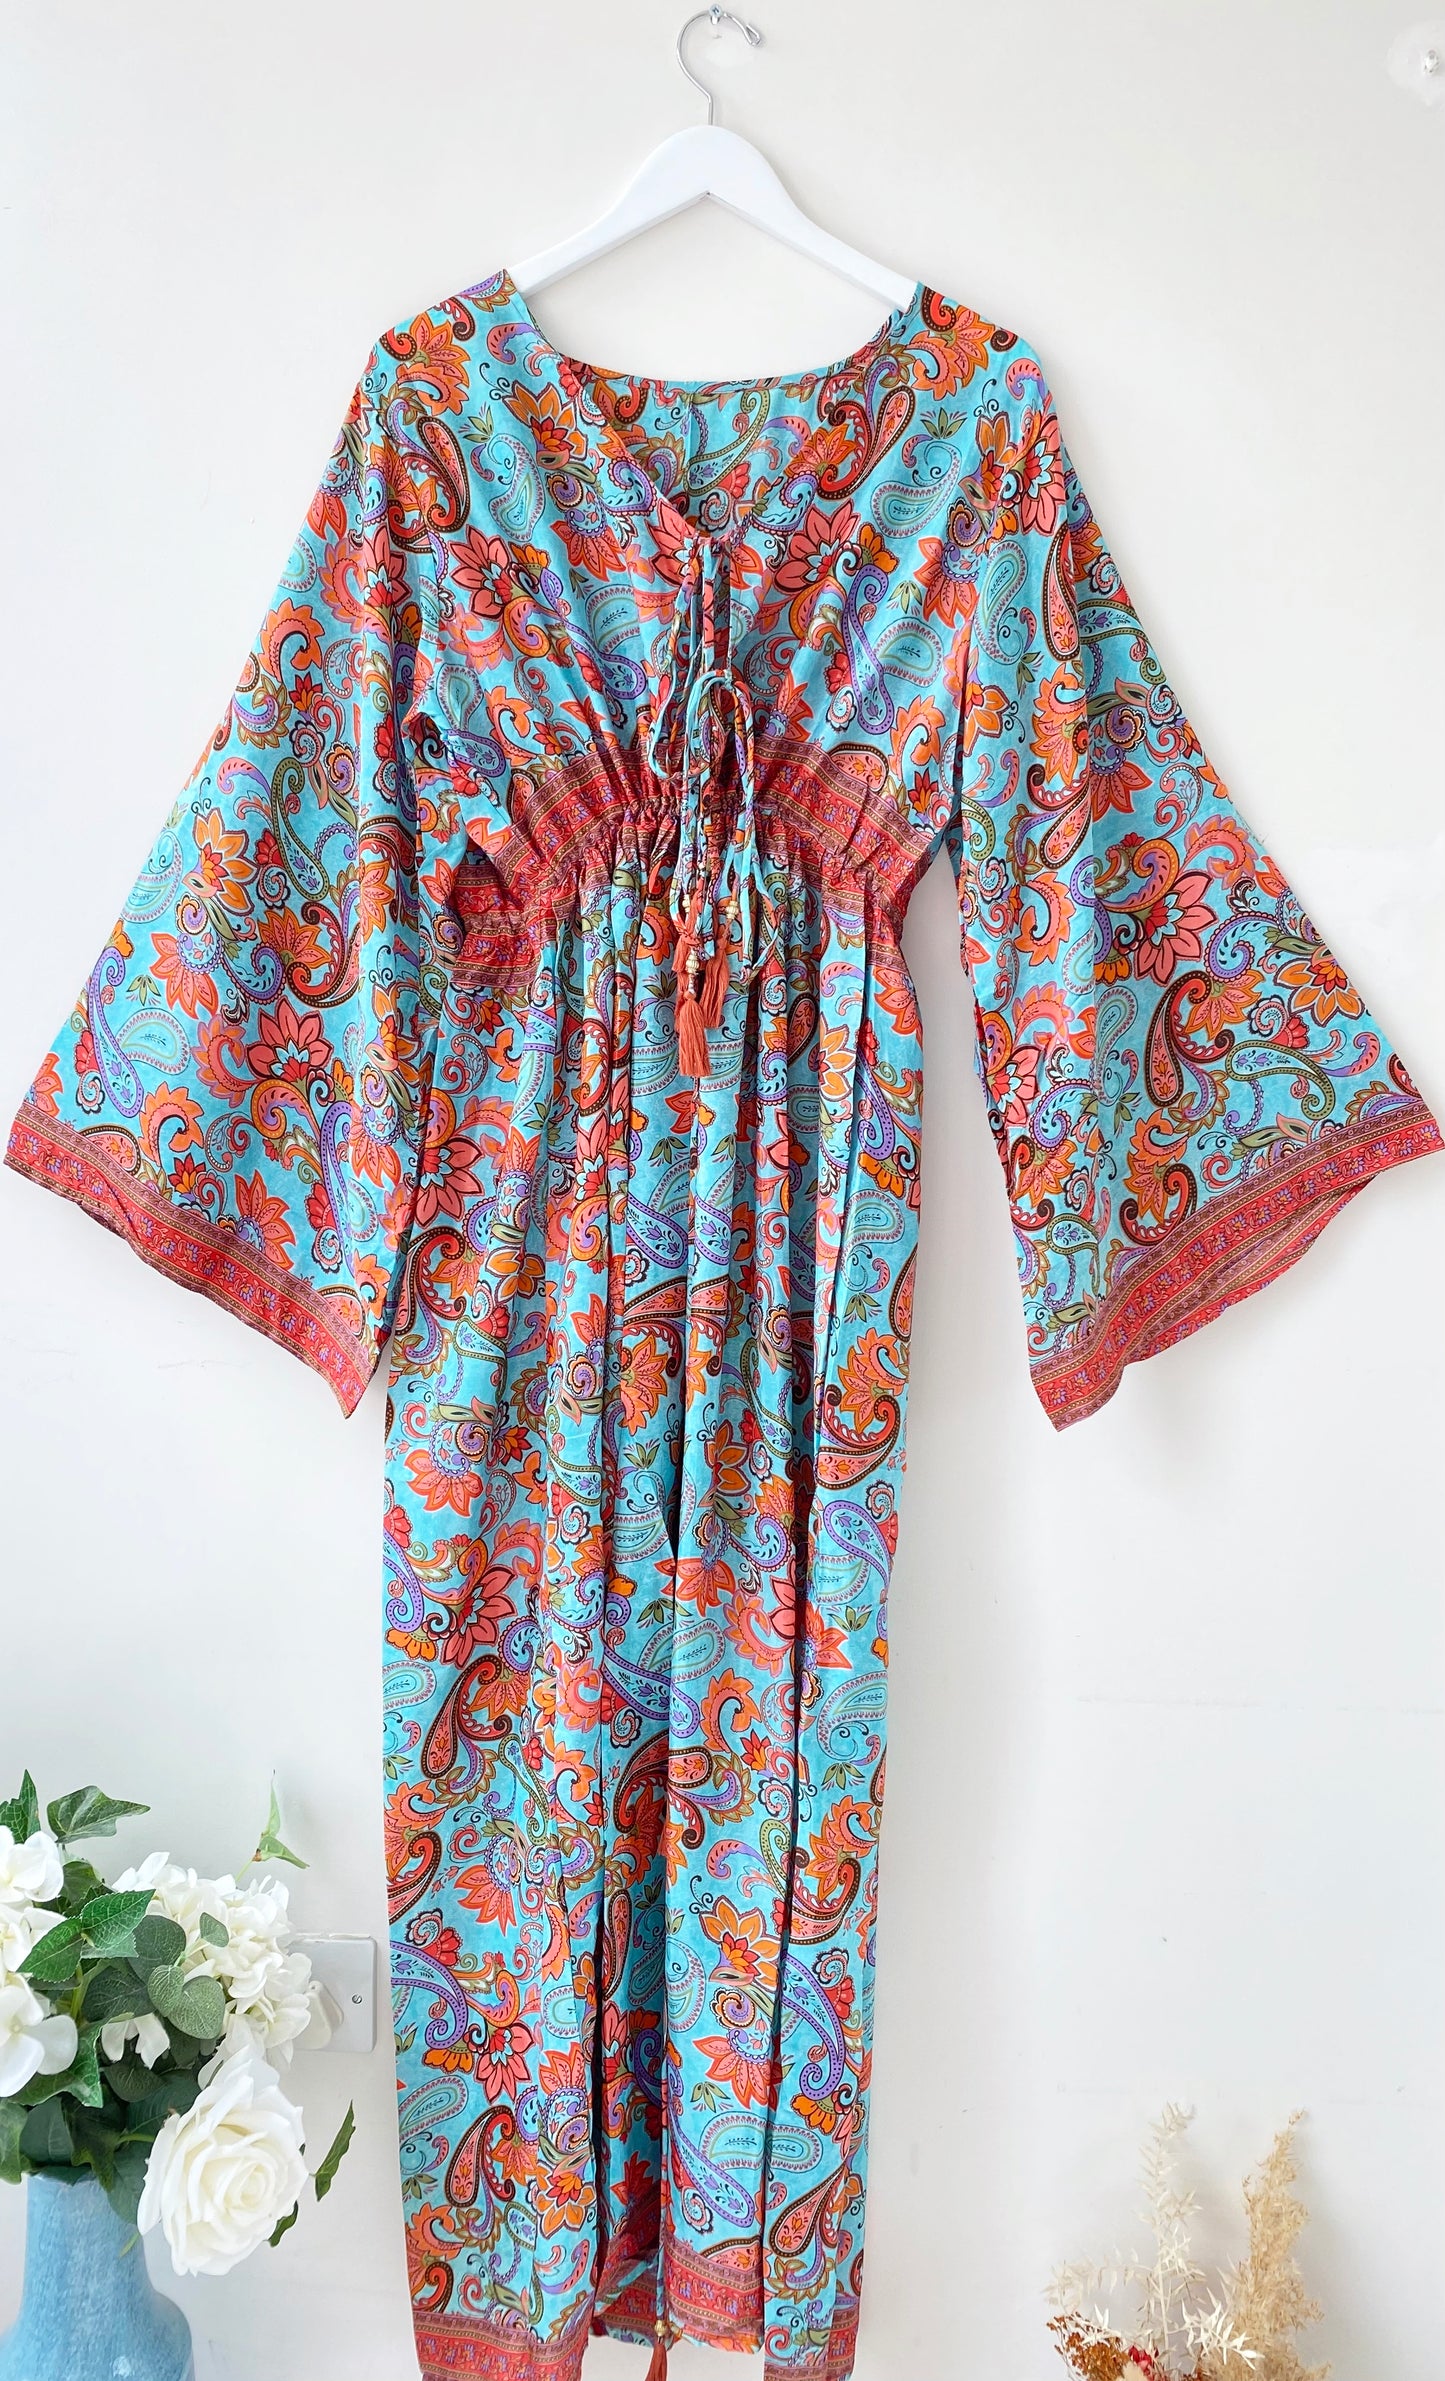 Nova blue red floral print silk maxi dress free size UK8-16